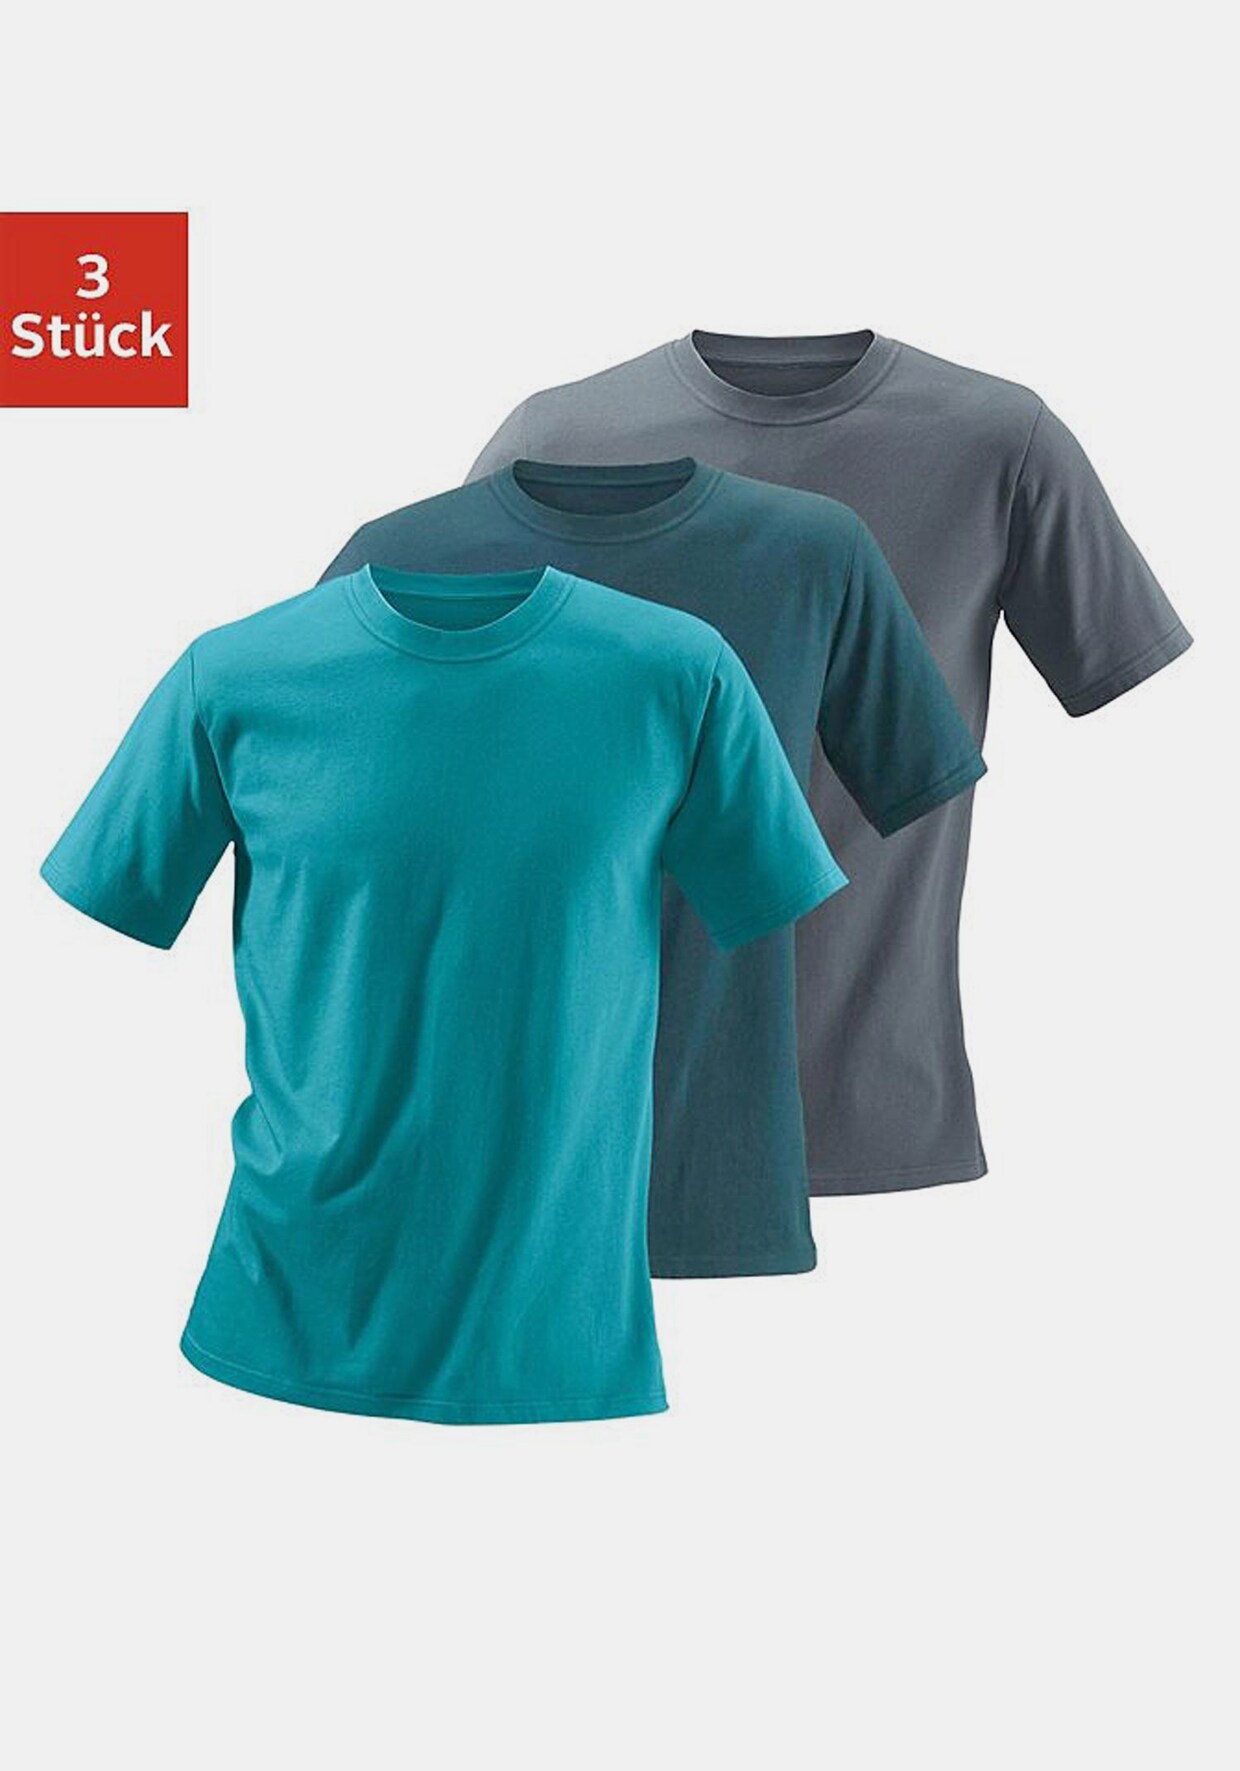 H.I.S T-Shirt - 1x dunkelpetrol + 1x dunkelgrau + 1x petrol